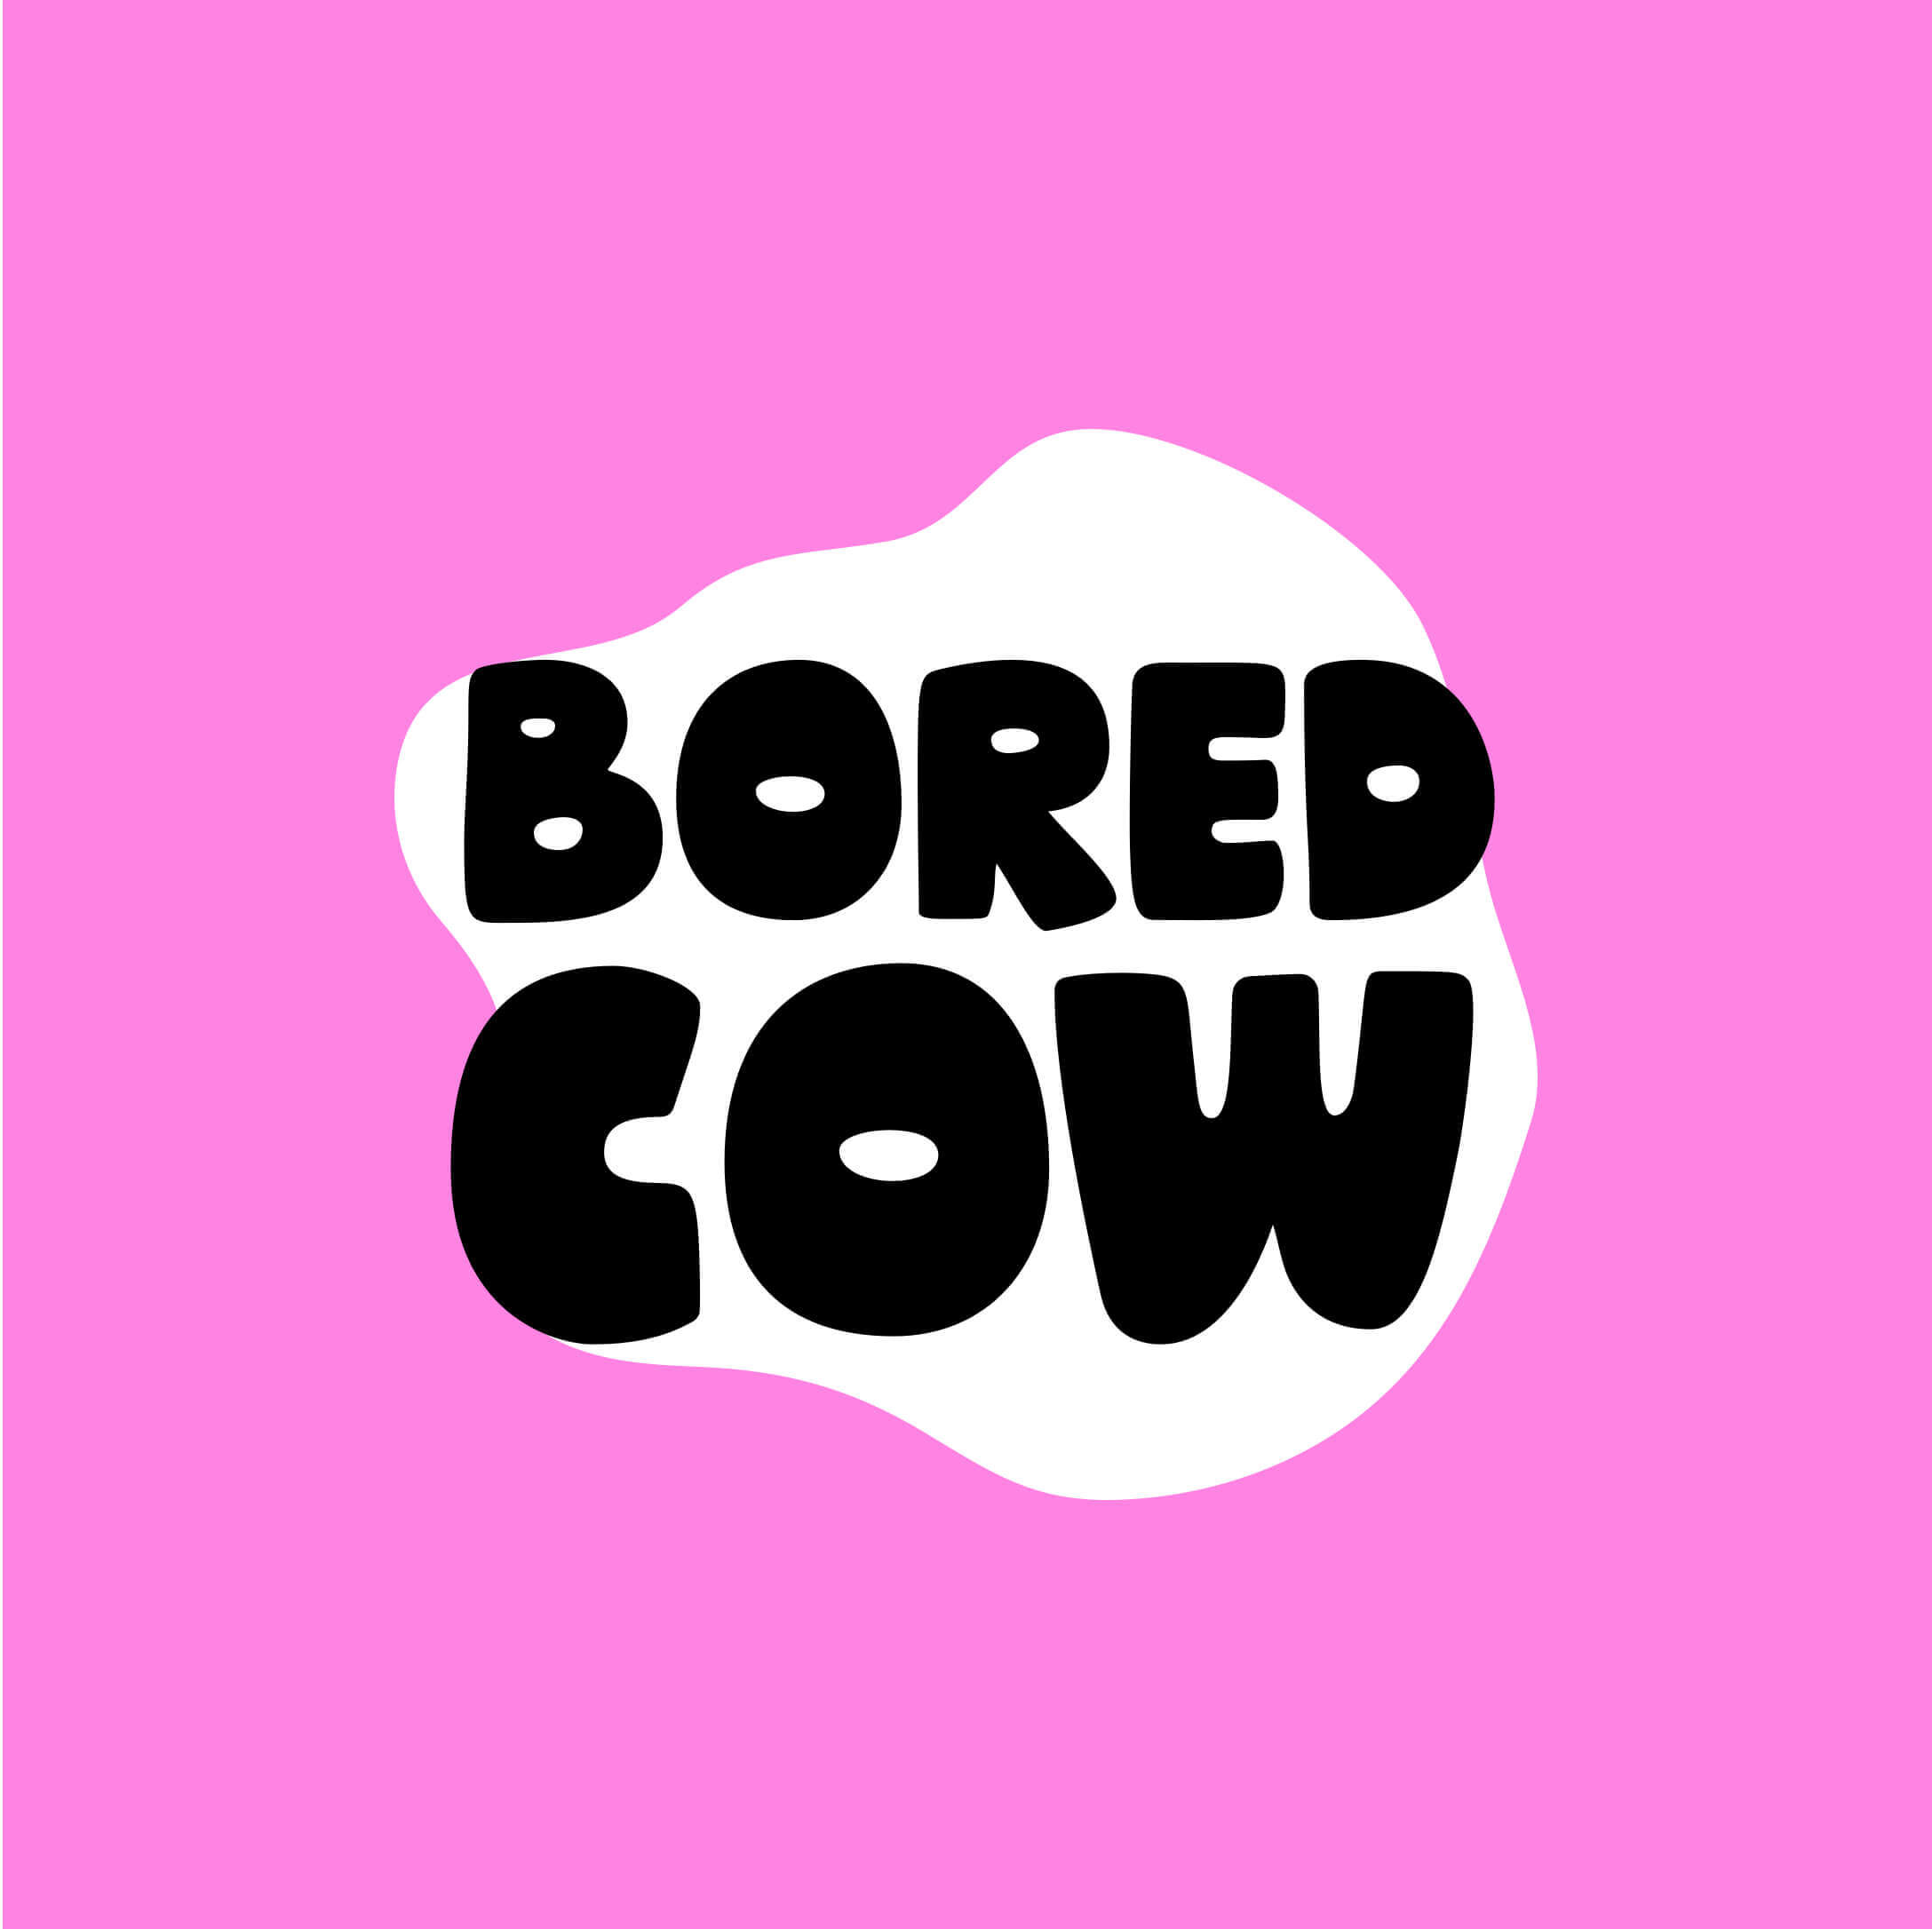 bored cow branding